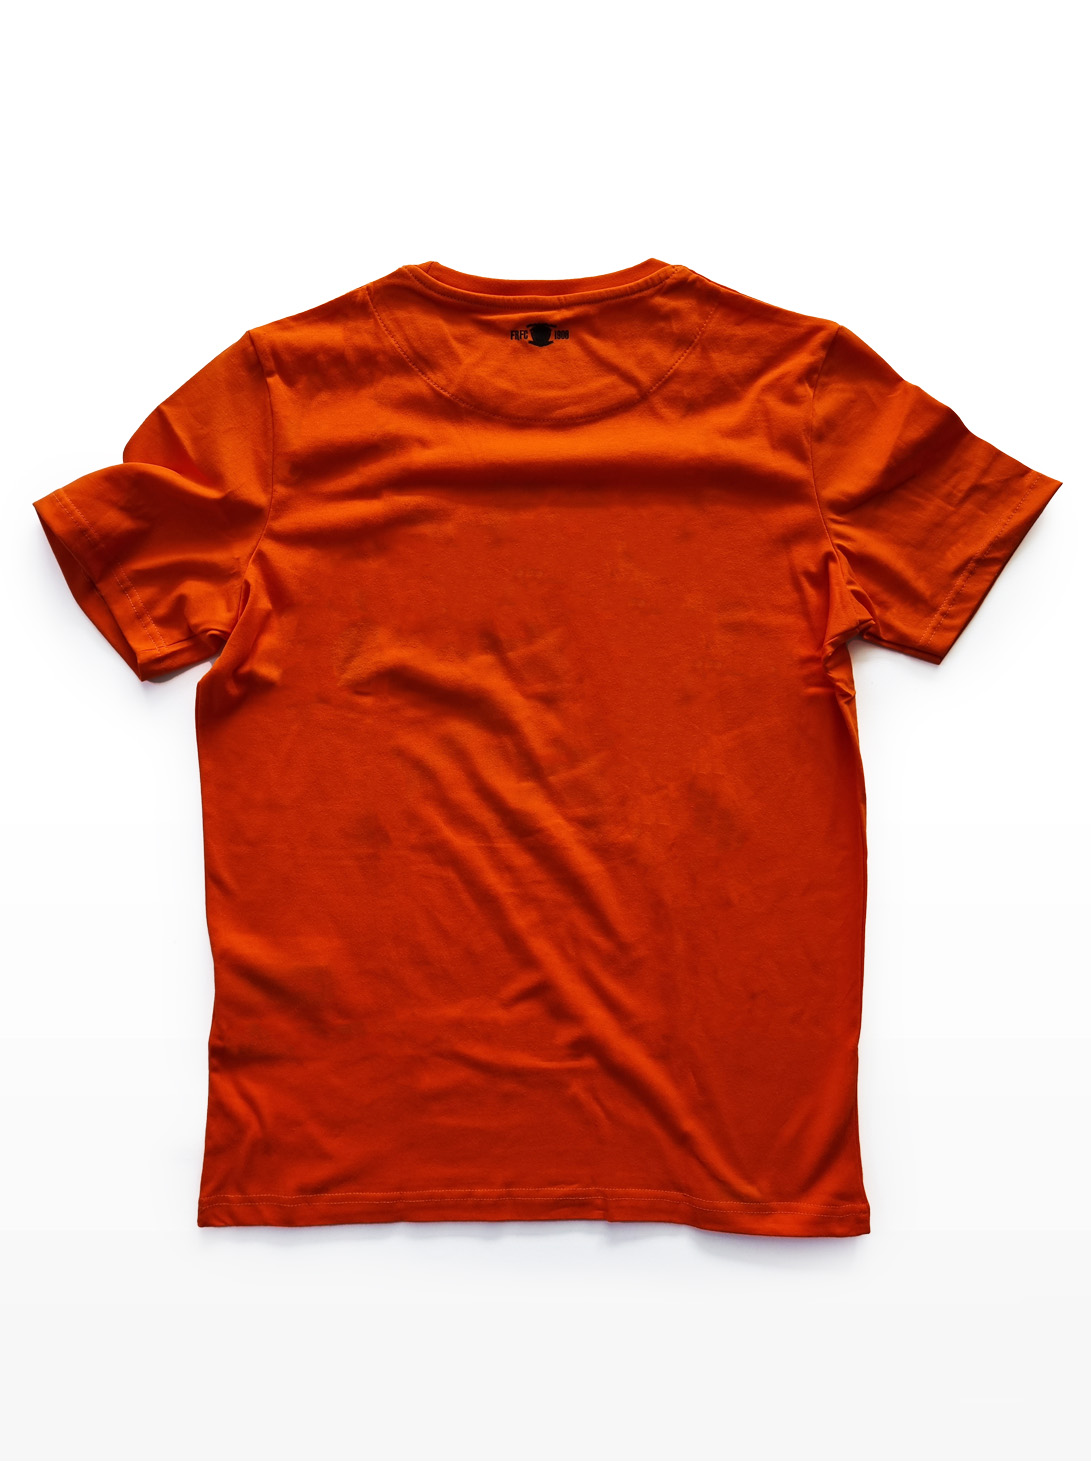 T-Shirt, Kruislogo Oranje met Zwarte Print